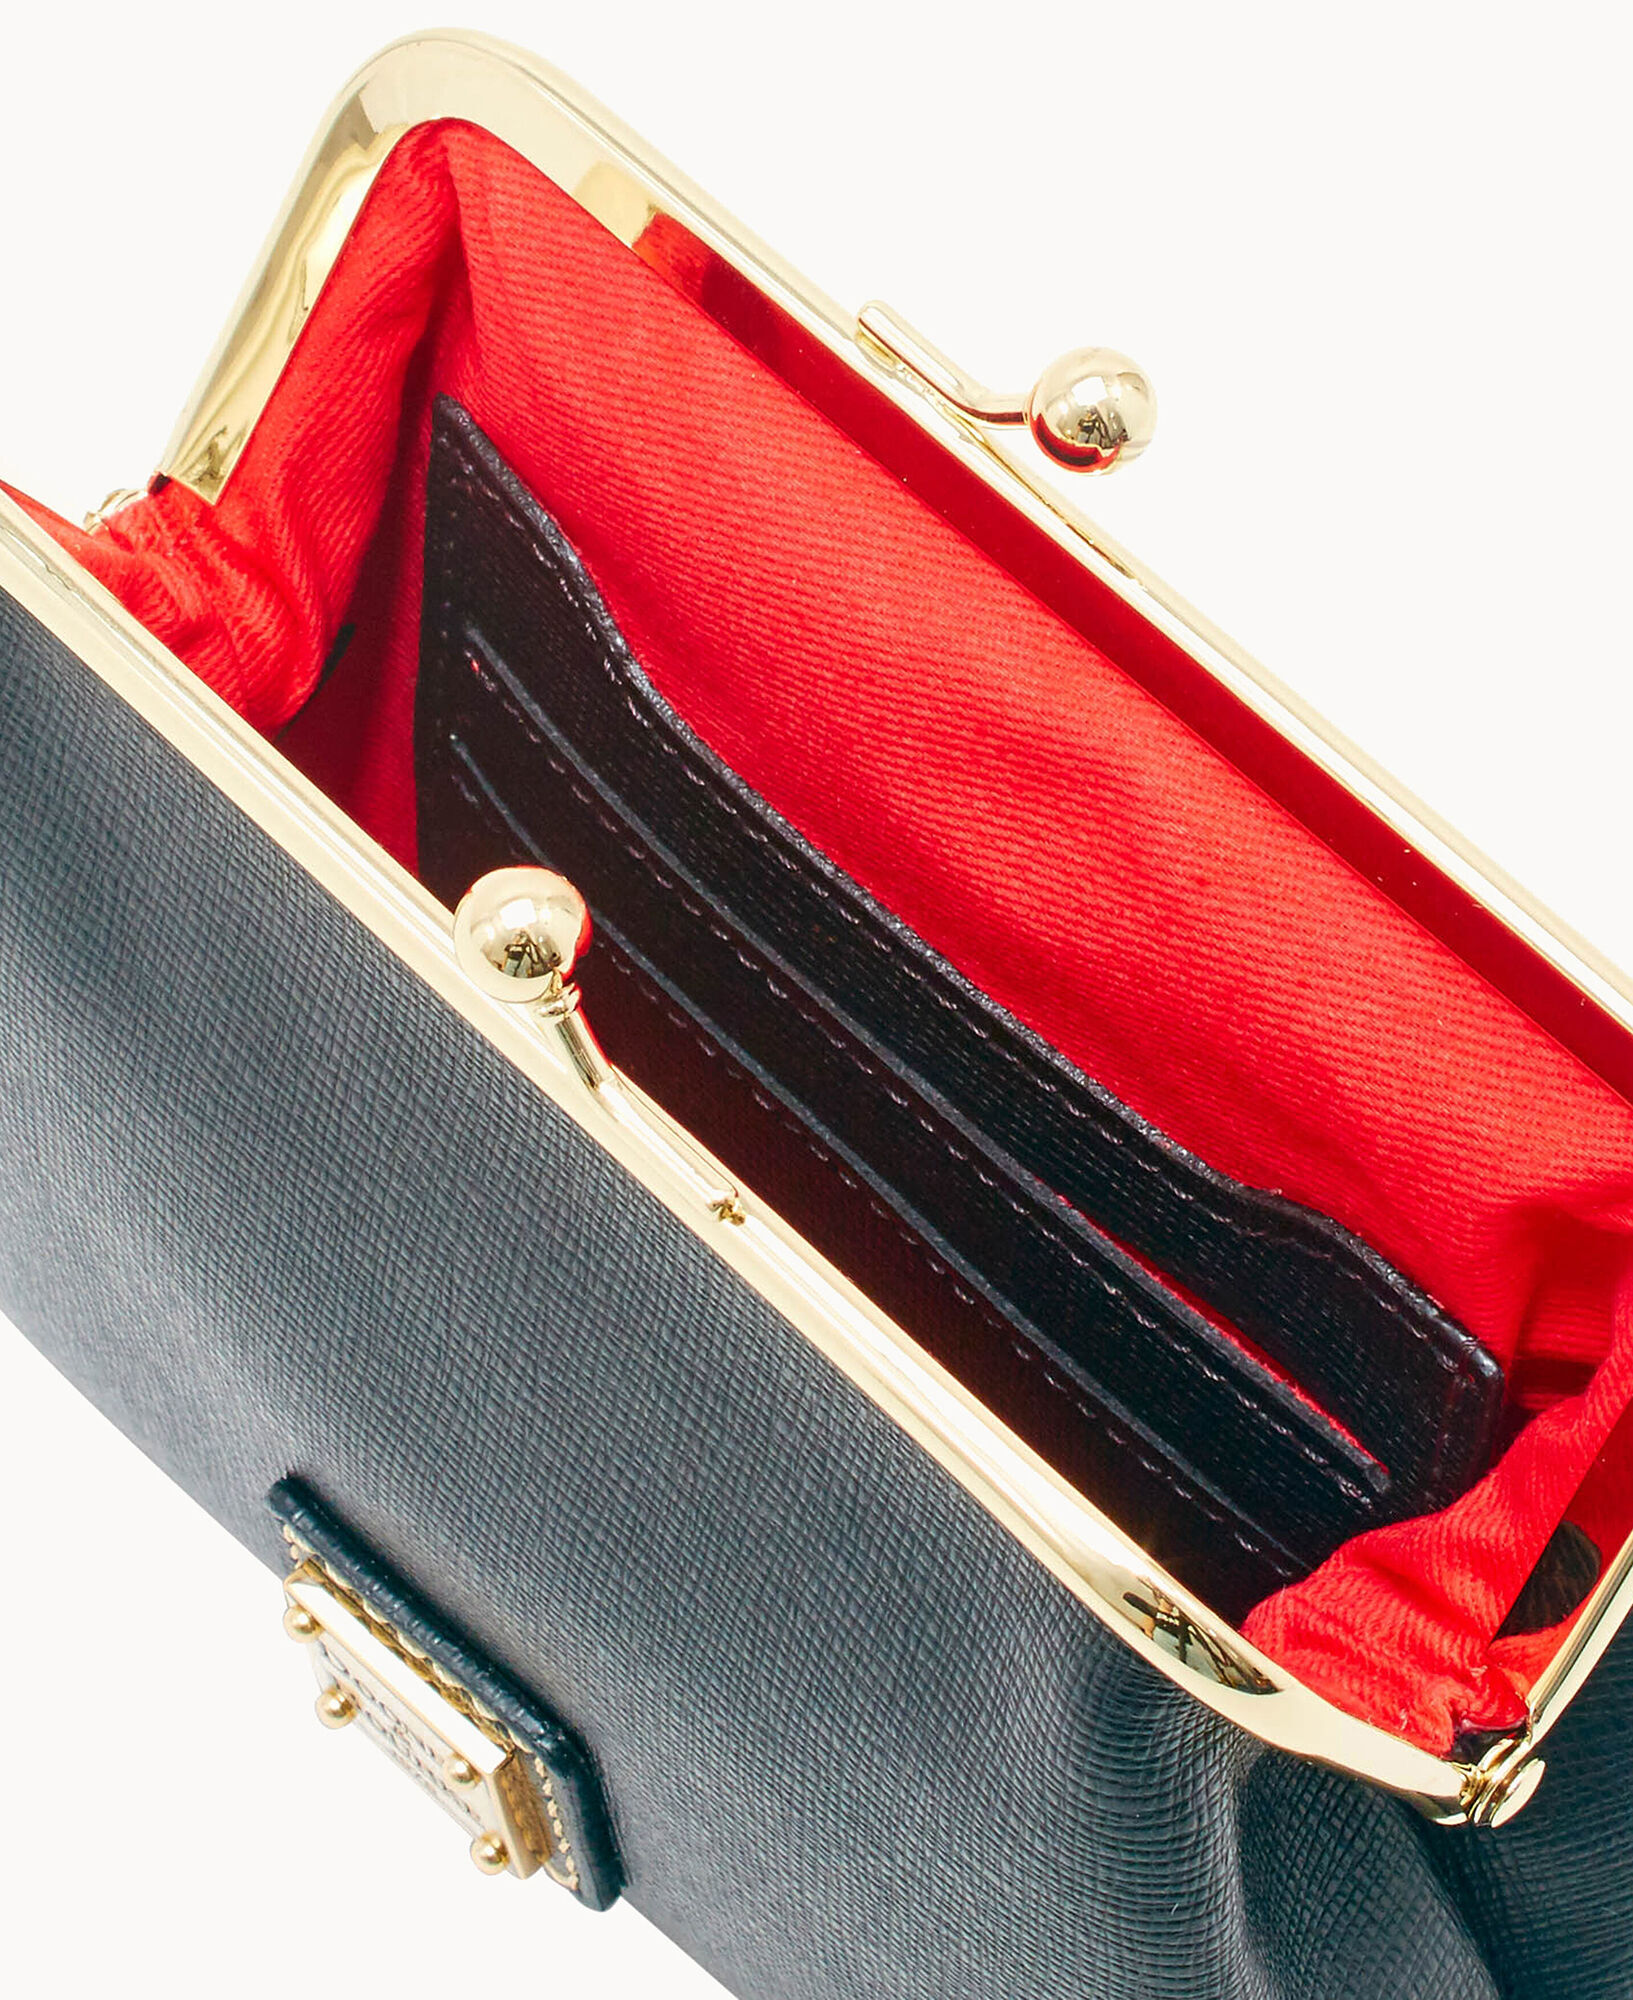 Dooney & Bourke Handbag, Saffiano Zip Crossbody - Black: Handbags